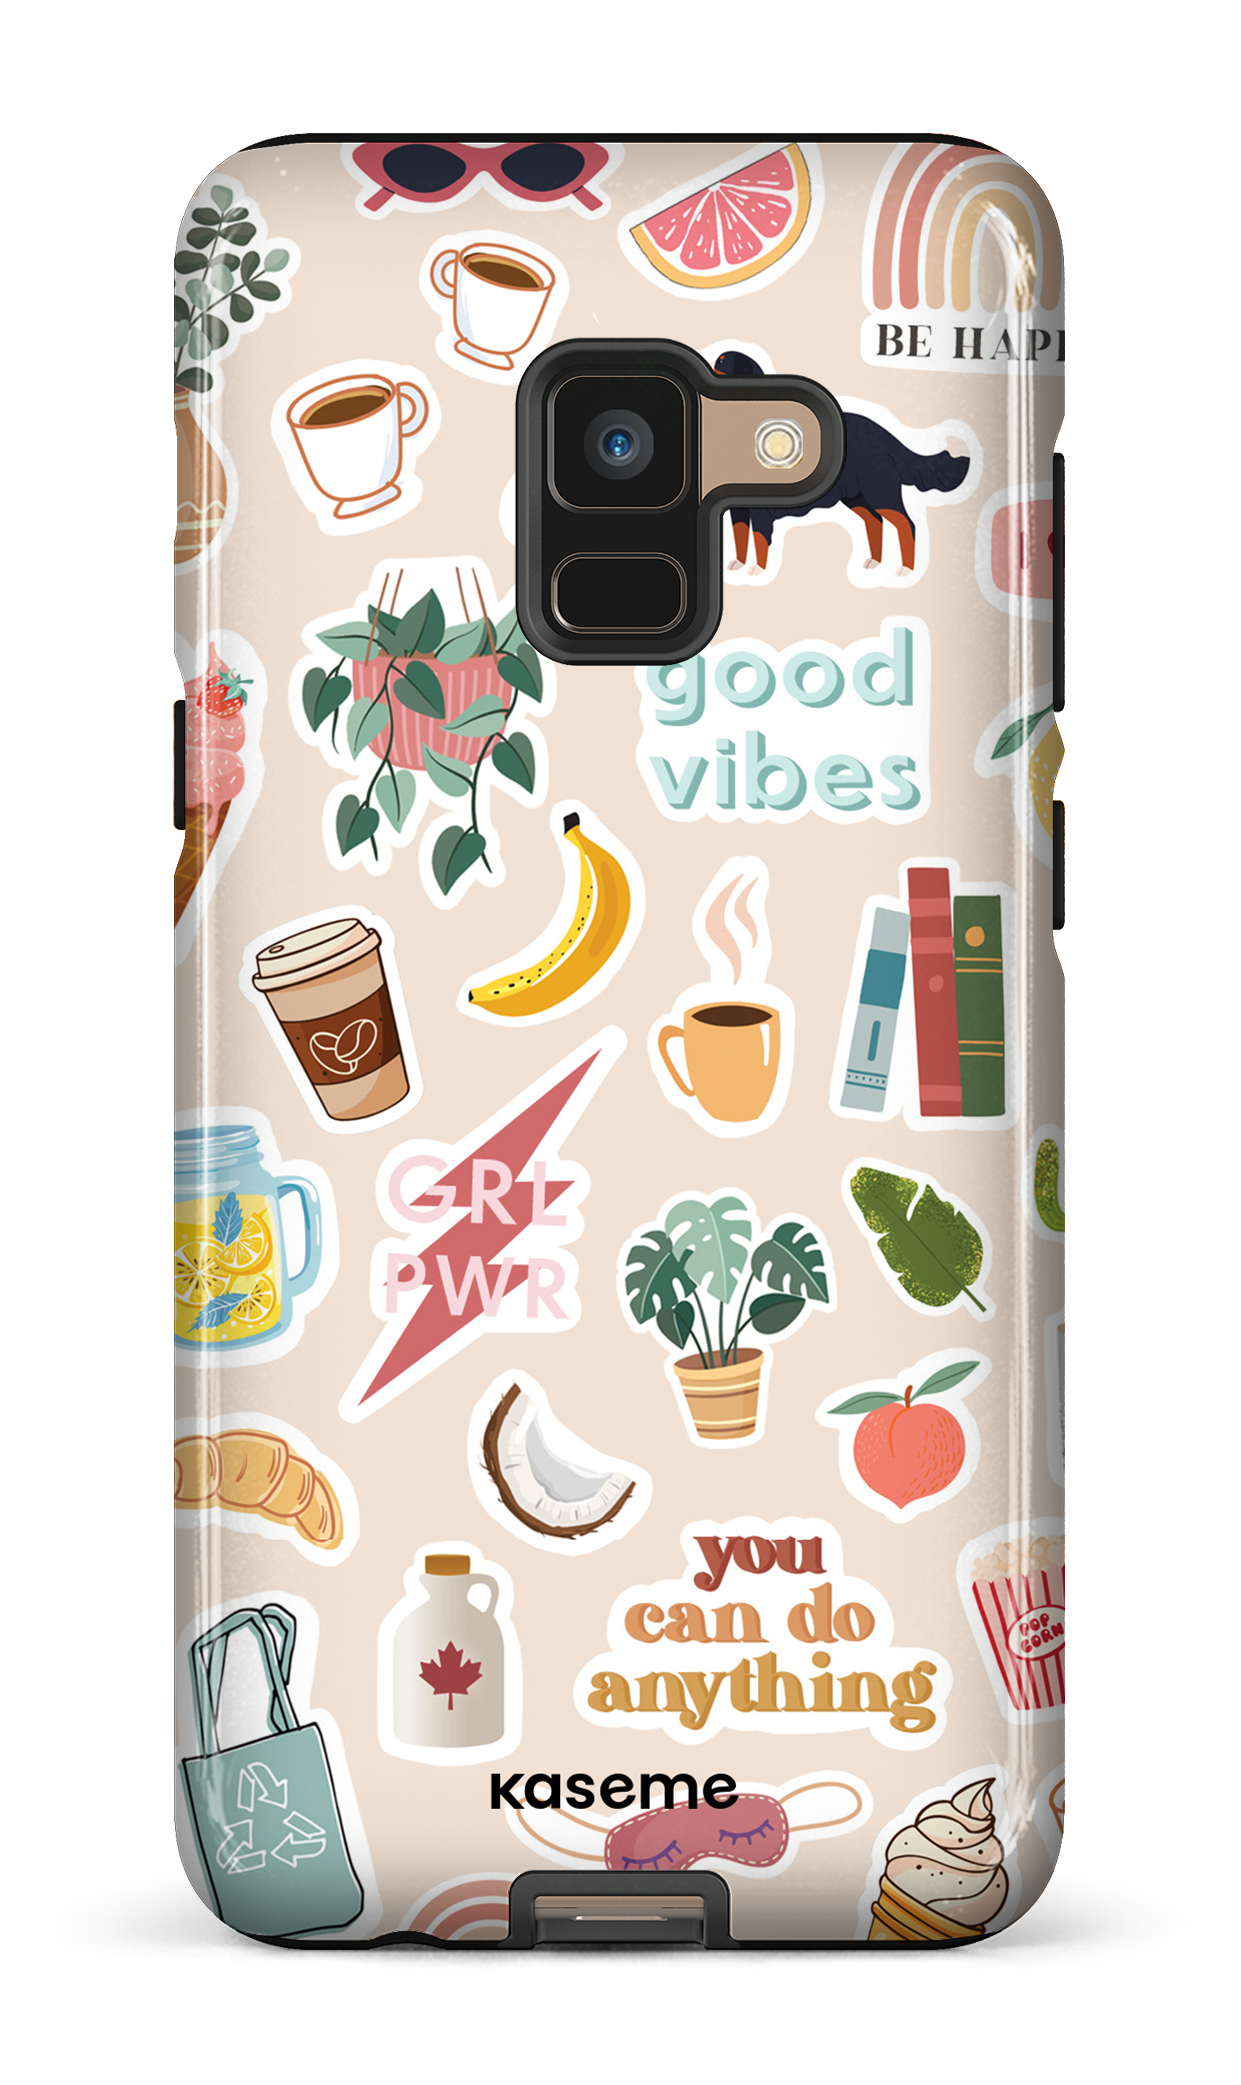 Good vibes - Galaxy A8